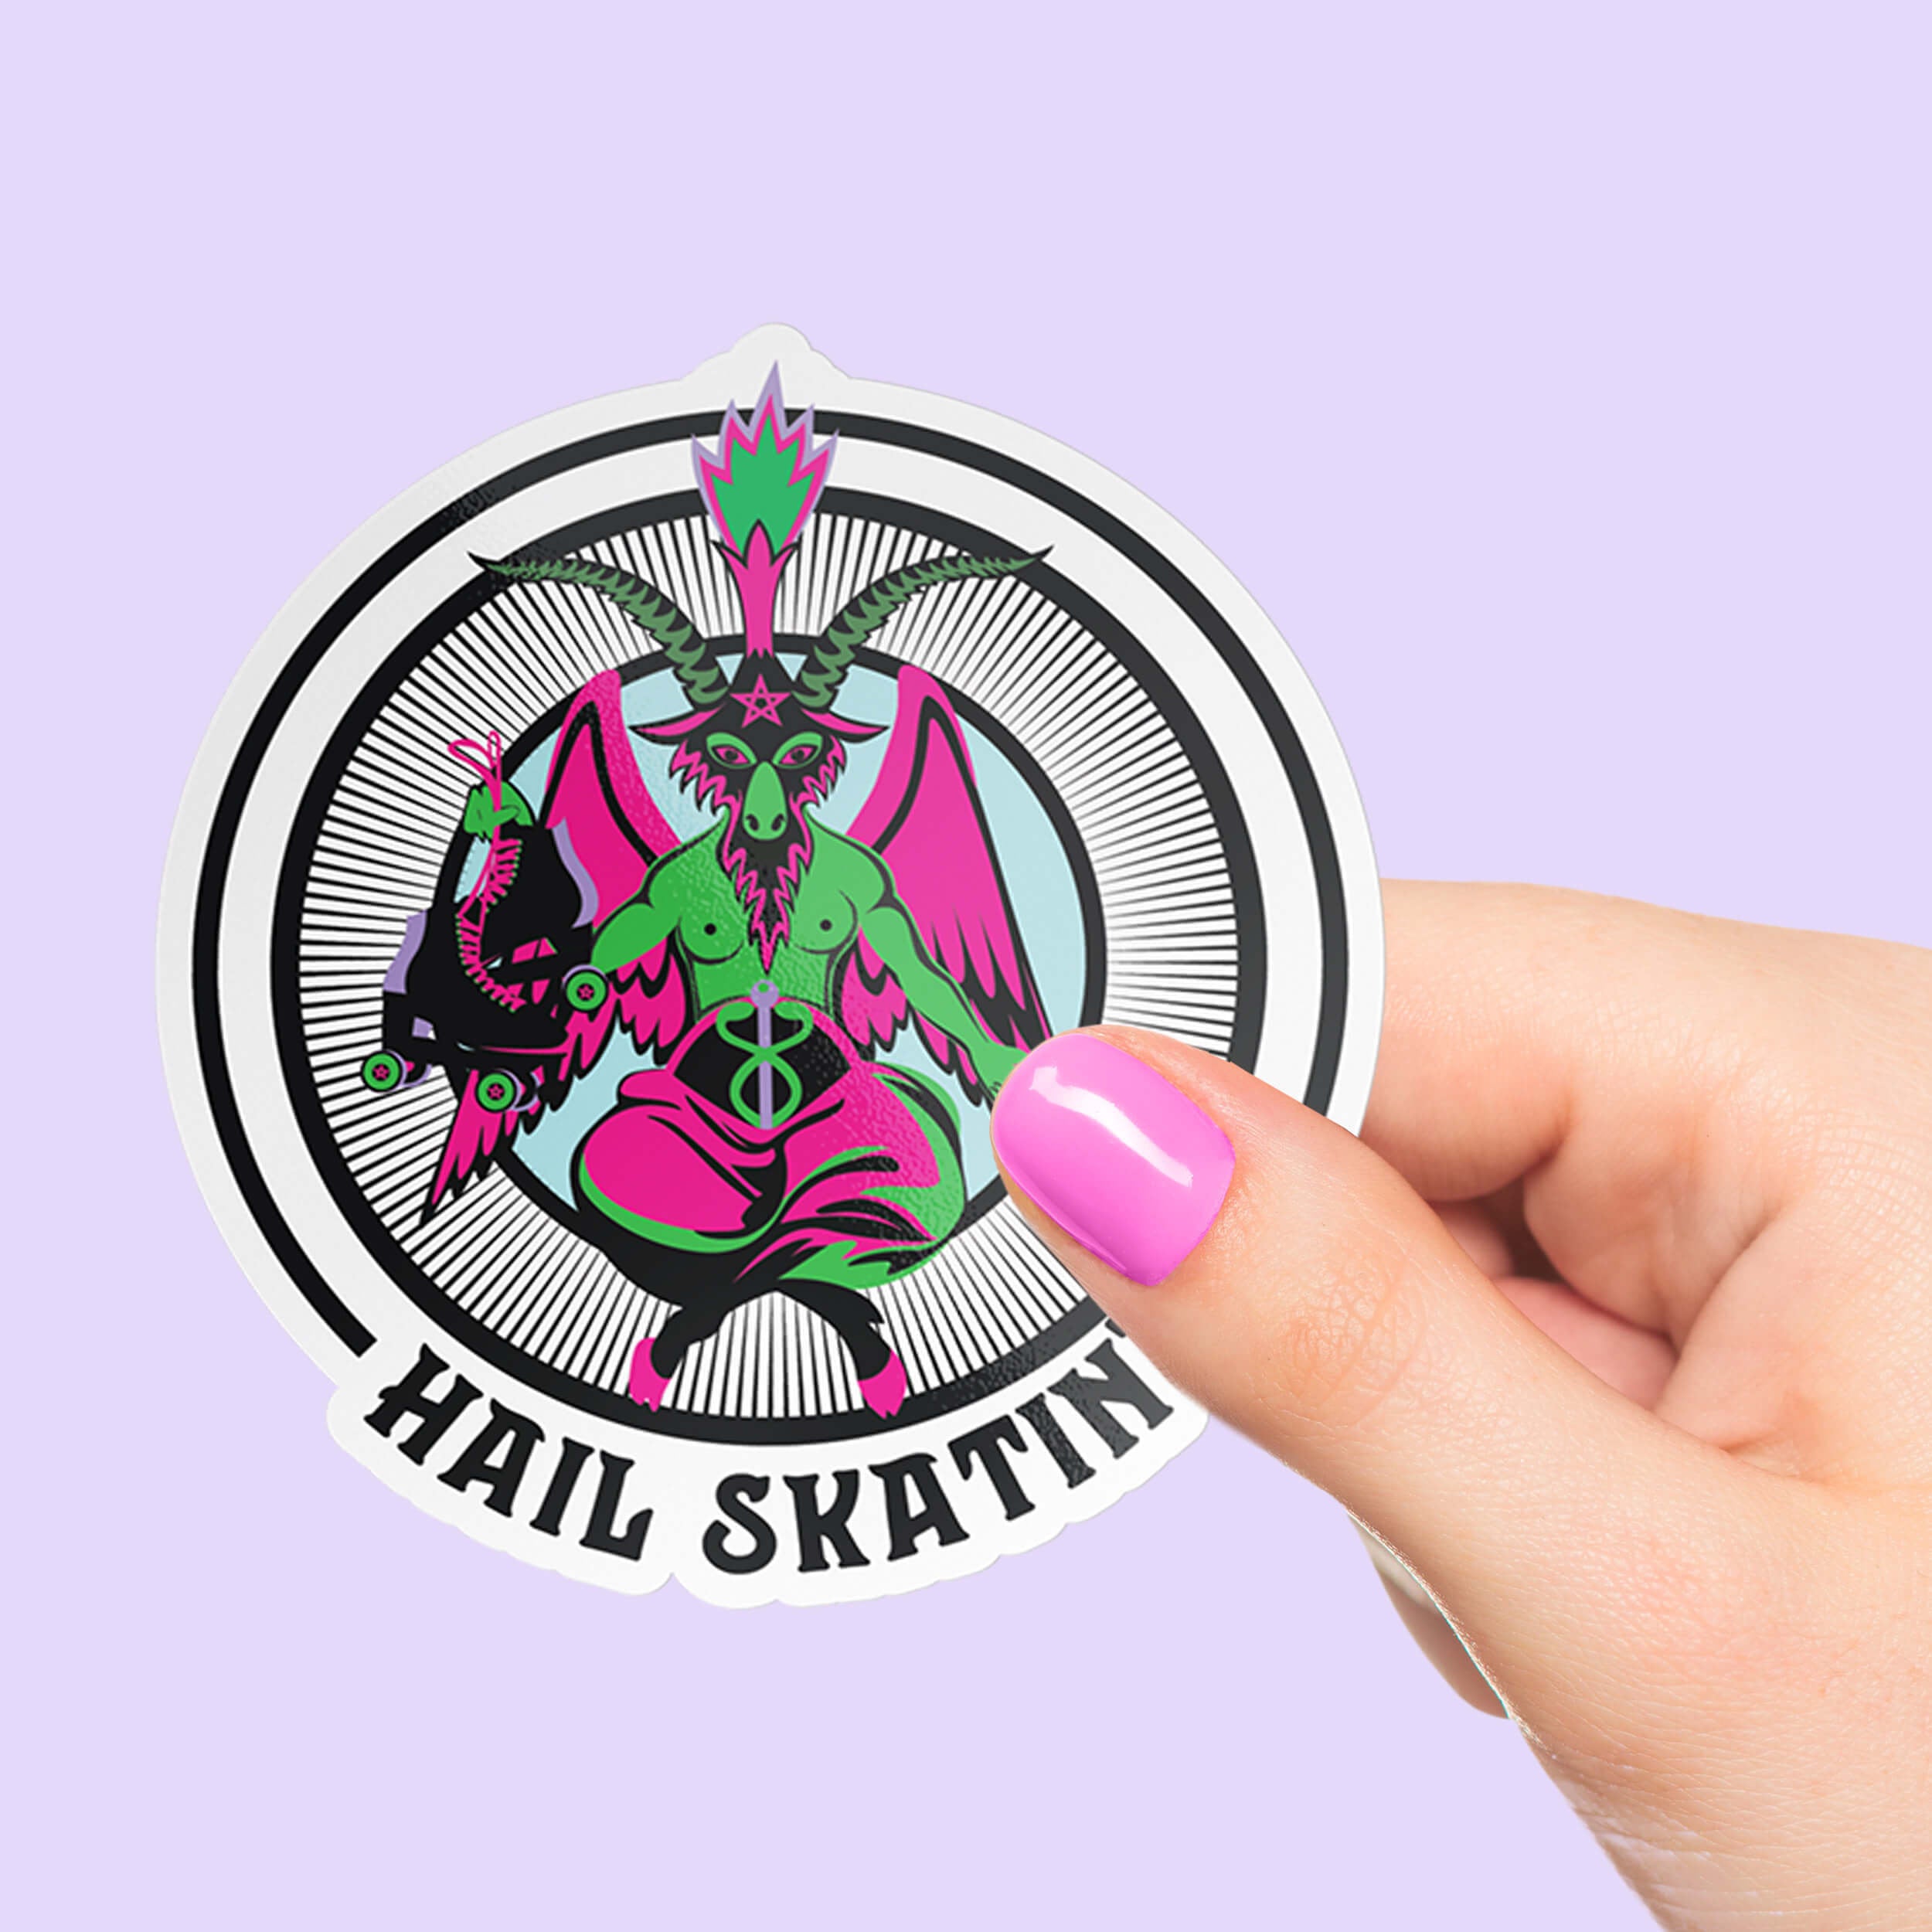 Hail Skatin' Roller Skate Vinyl Sticker, Pentagram Hydroflask Roller Derby Sticker, Roller Skating Accessories and Gifts